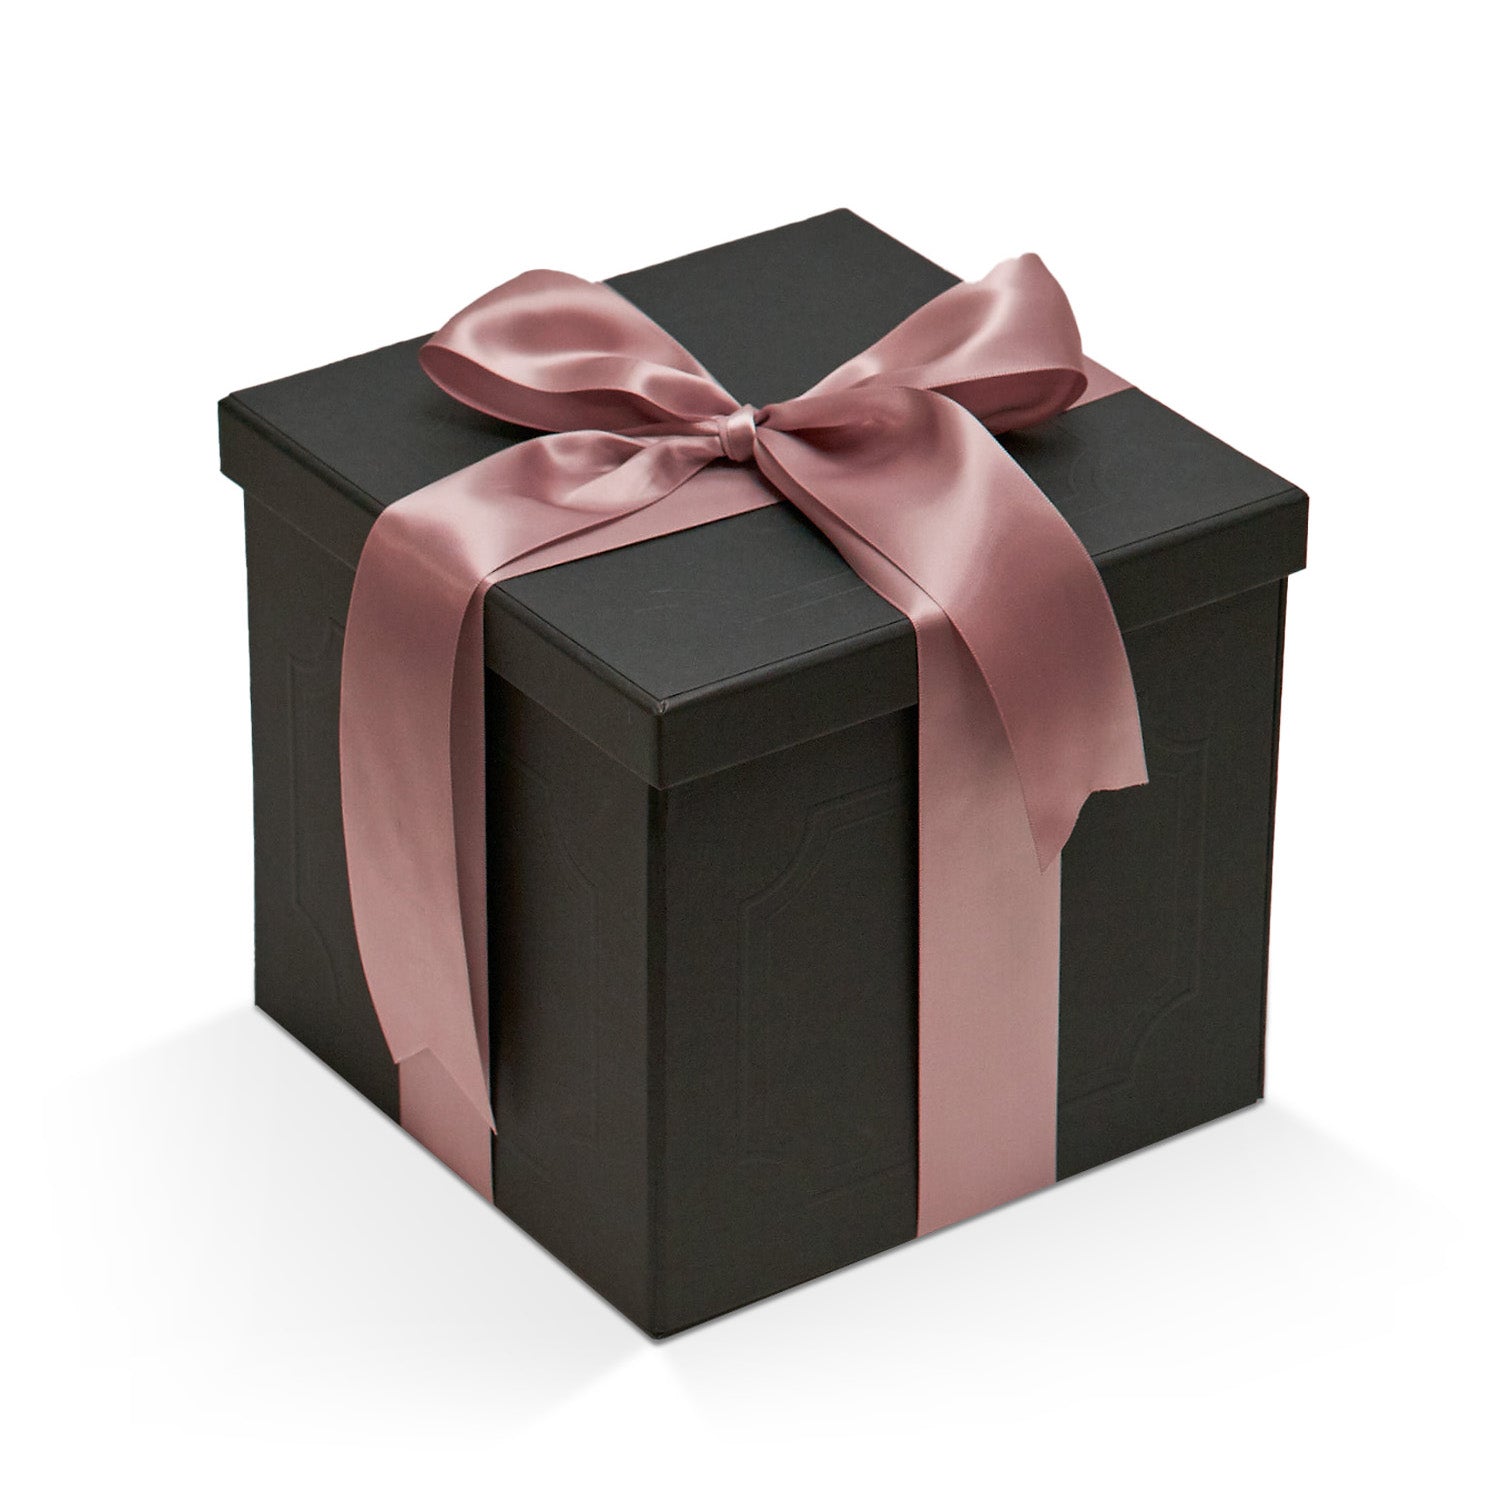 Feu Gift Box